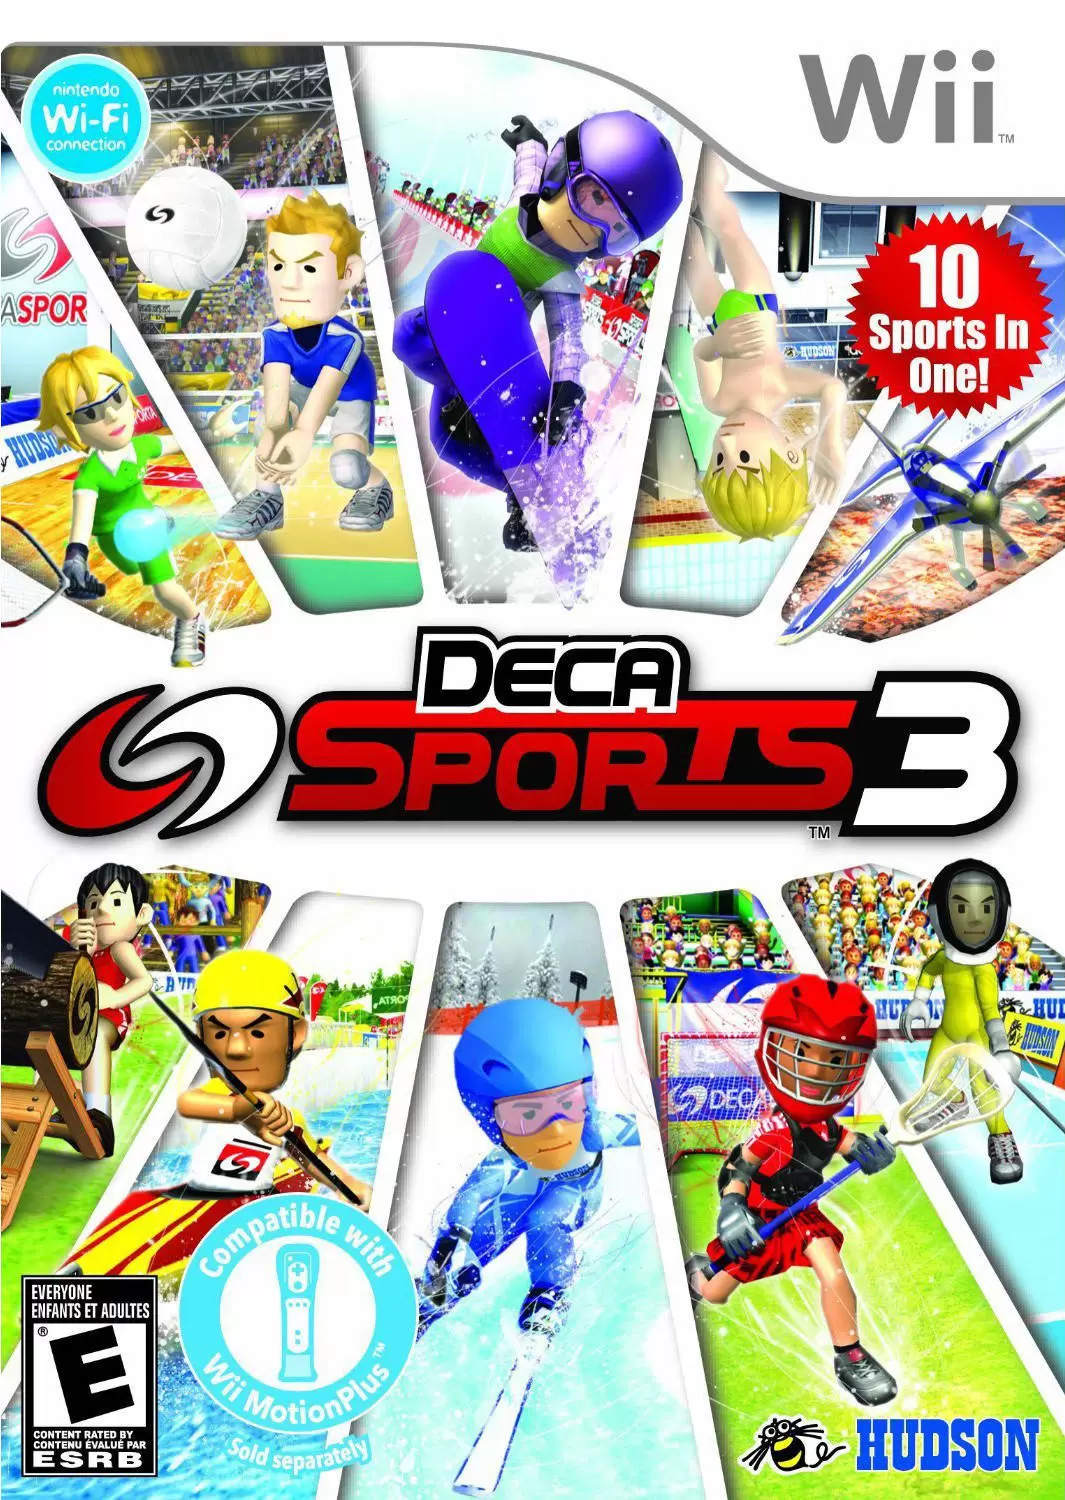 Nintendo Wii Games - Deca Sports 3